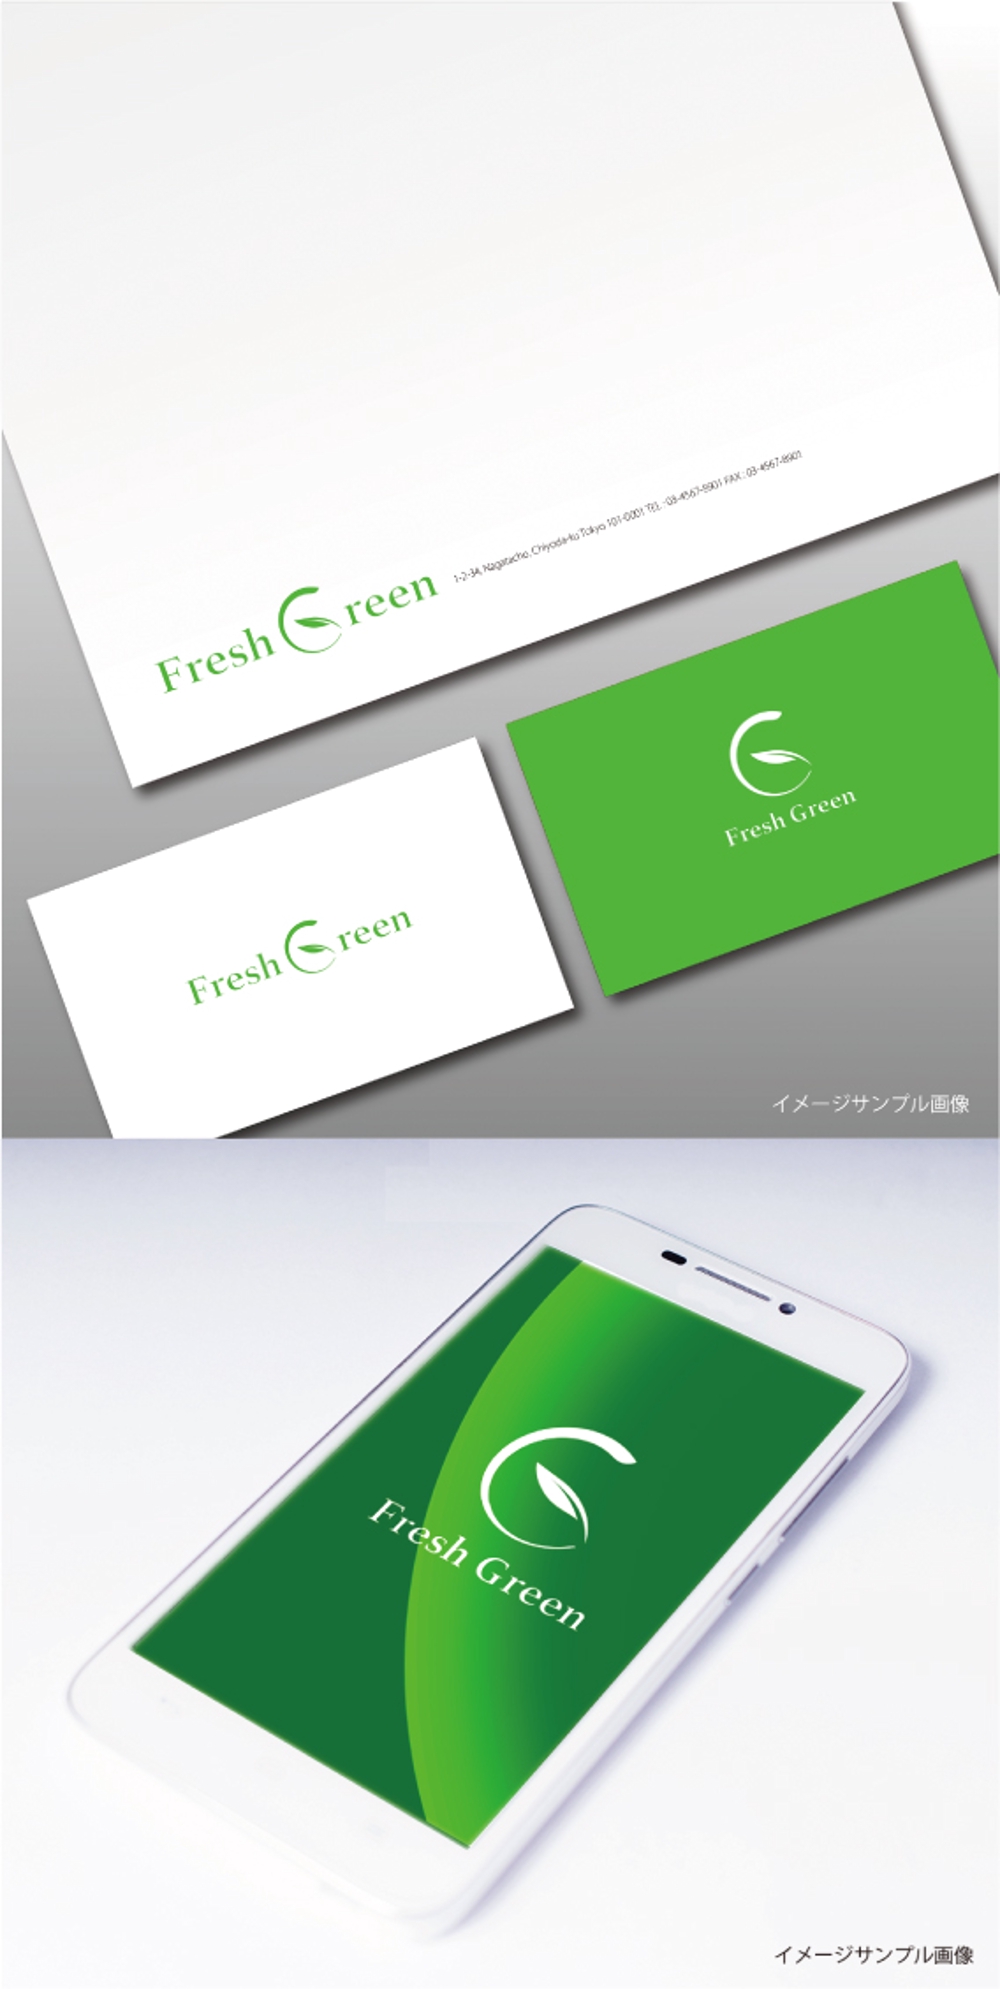 Fresh_Green_image.jpg